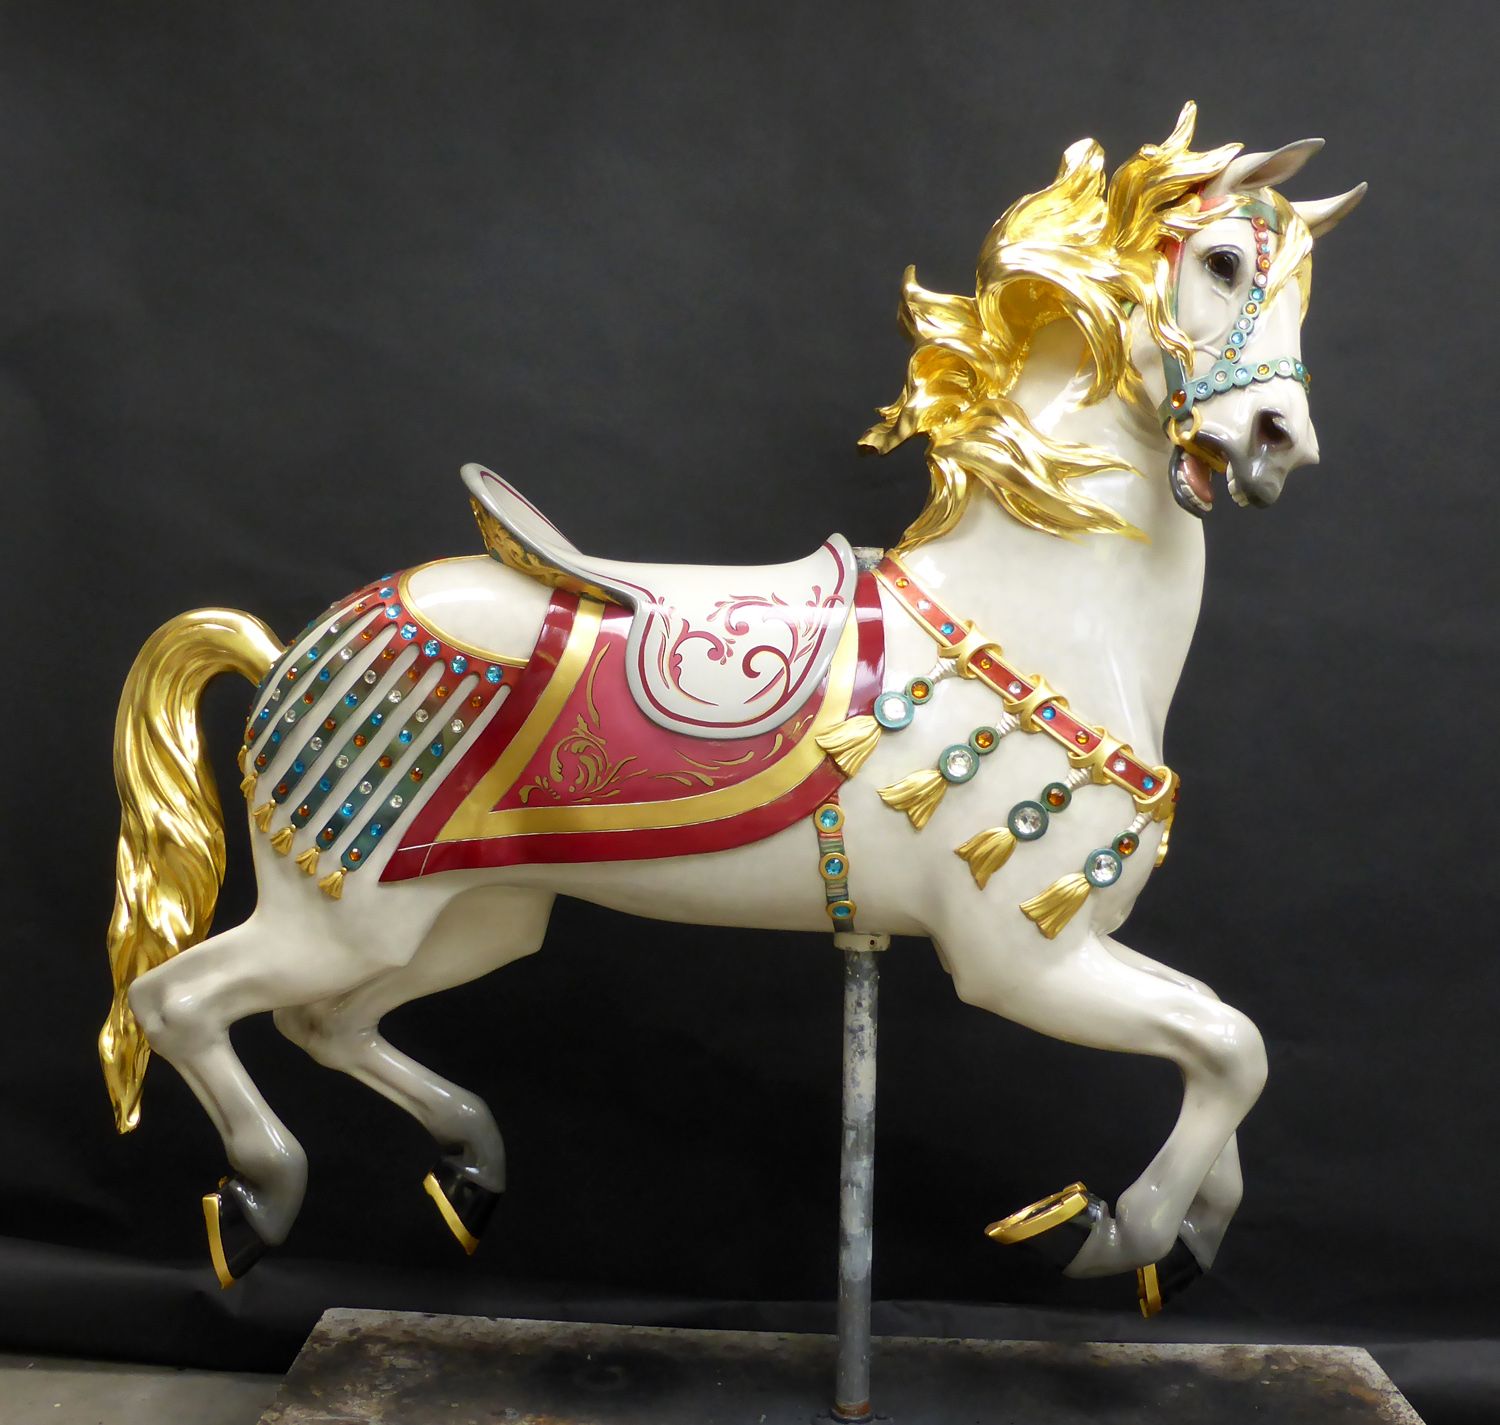 1927-Illions-supreme-carousel-horse-restored-lise-liepman-artist ...